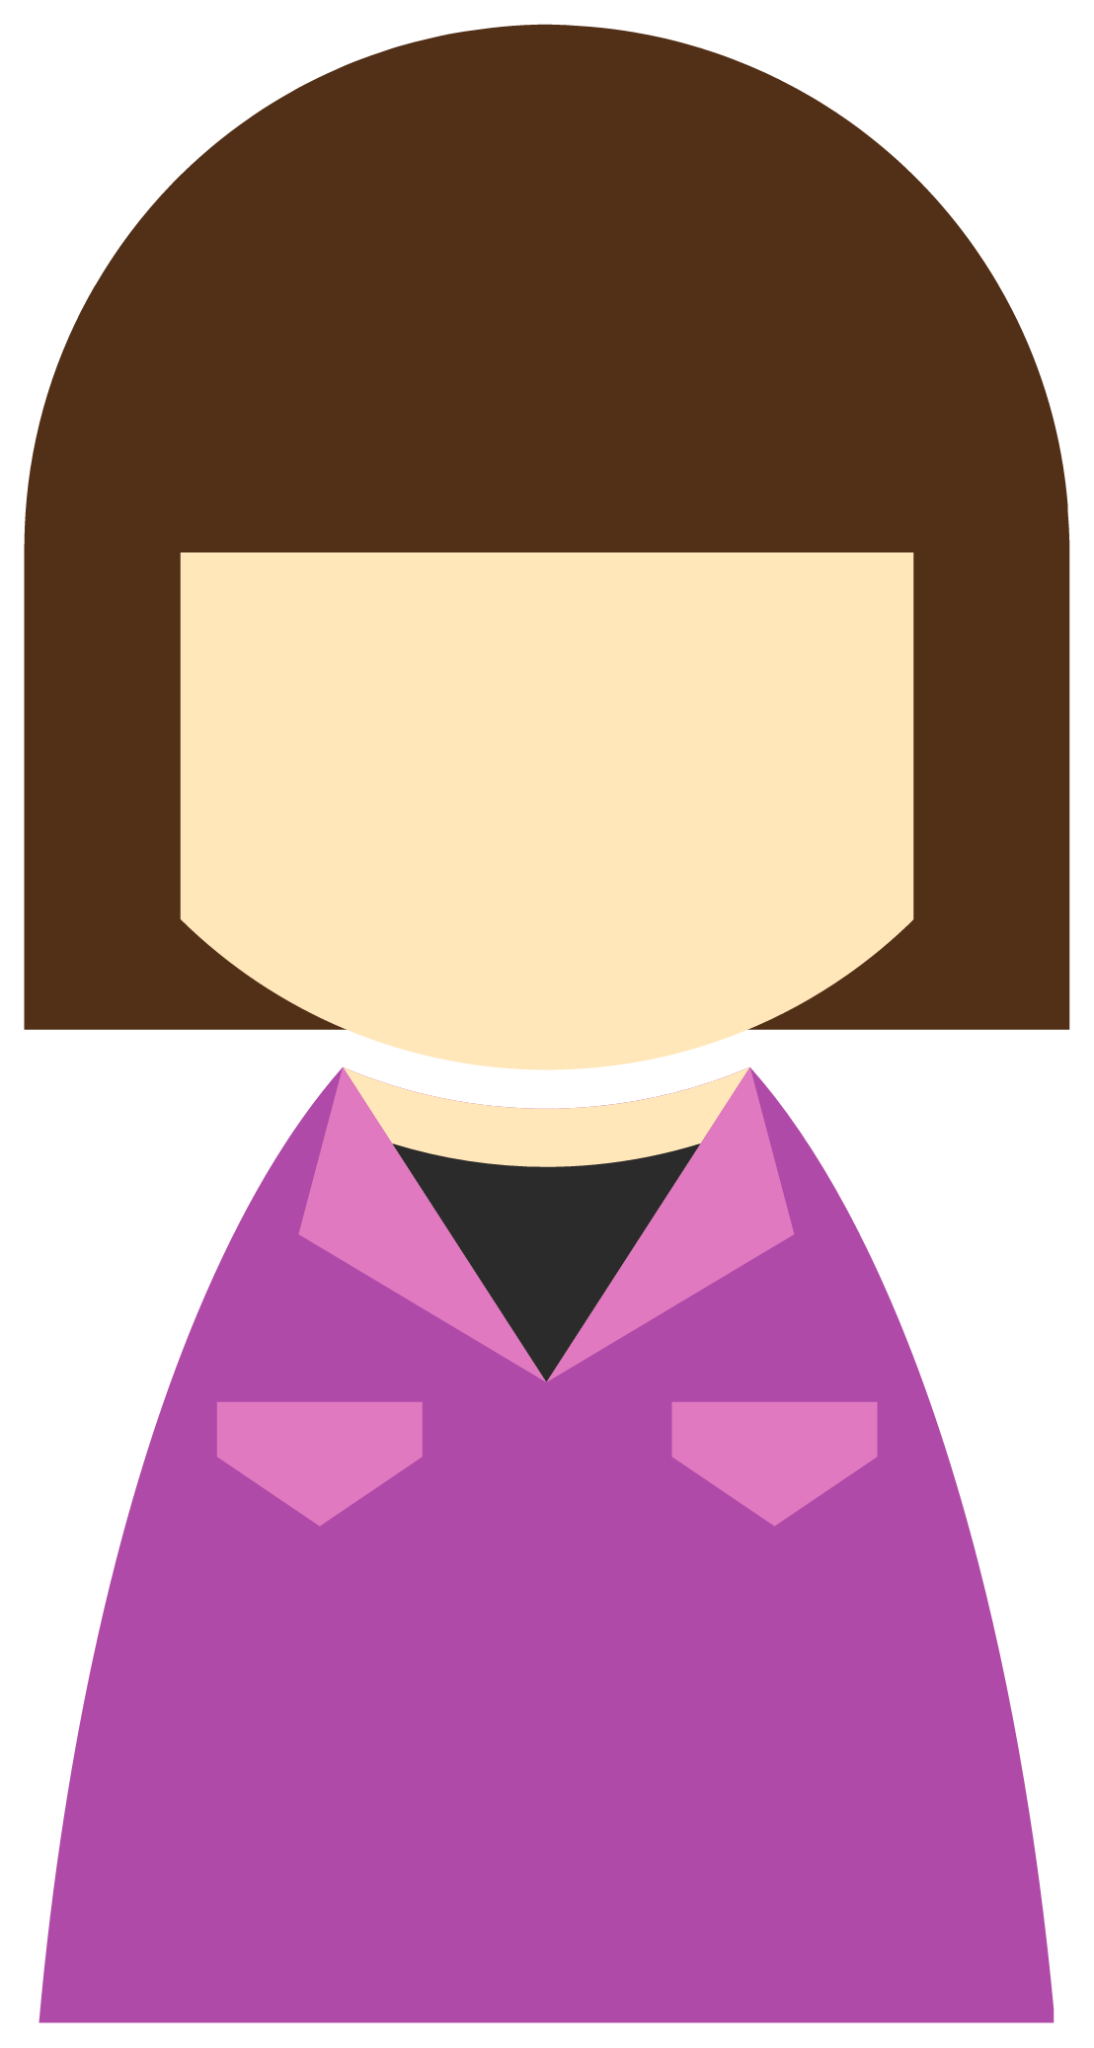 female work clothes purple icon